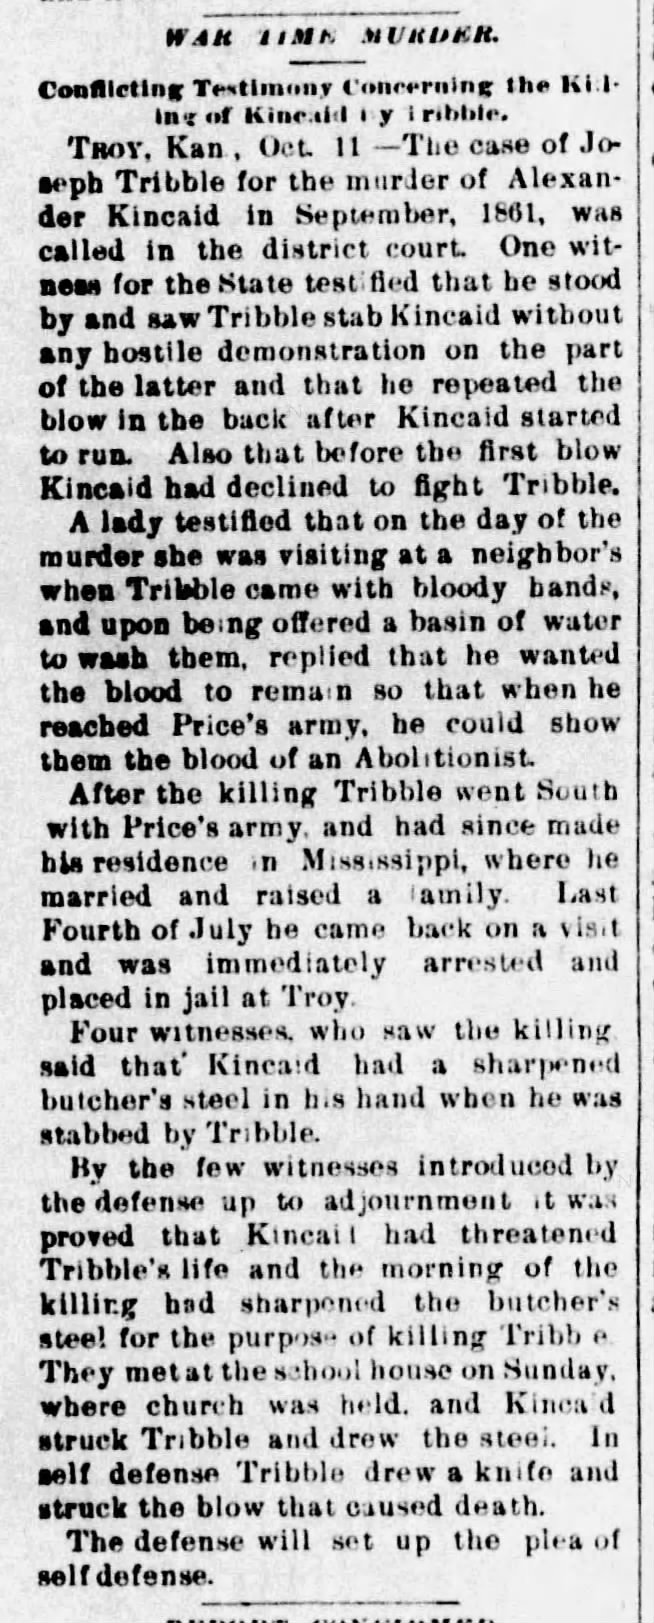 Joseph Tribble tried 29 years following Alexander Kincaid homicide.